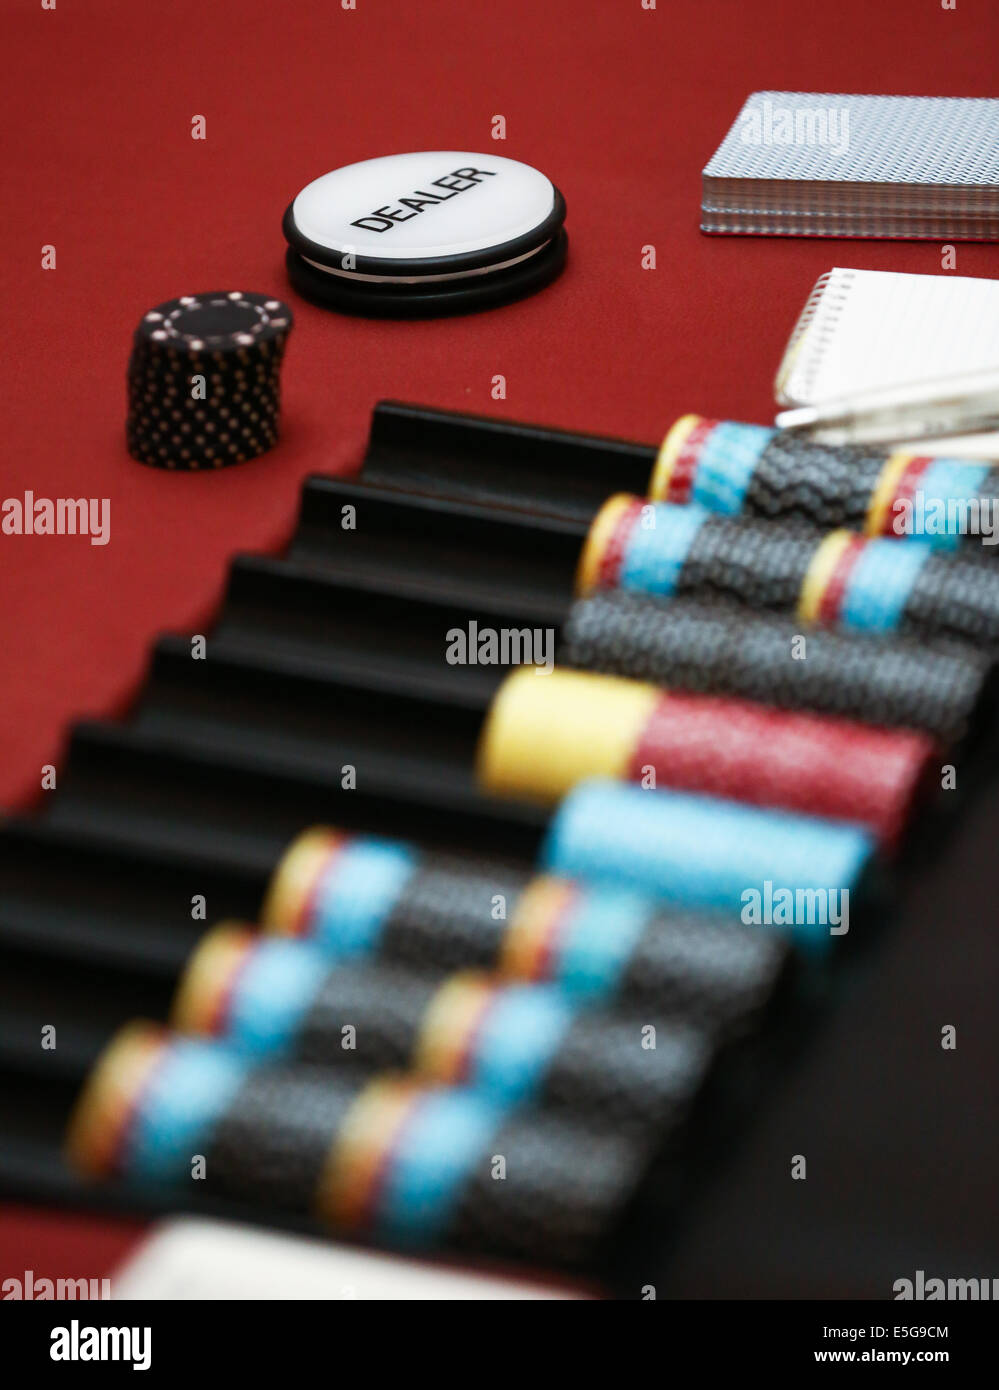 Dealer chip in poker game Stock Photo